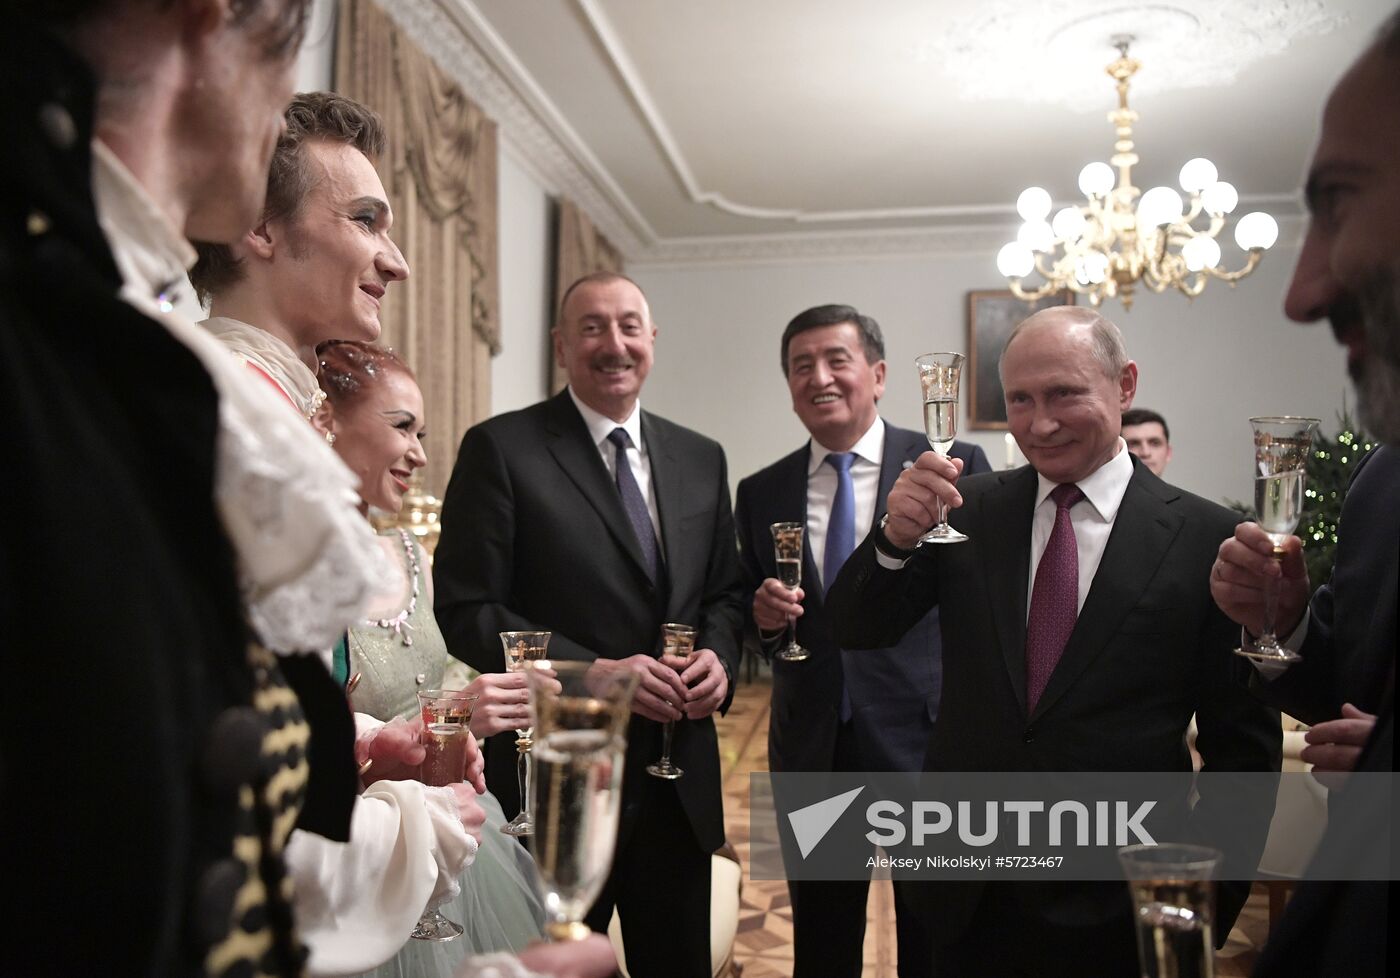 President Vladimir Putin's working trip to St. Petersburg